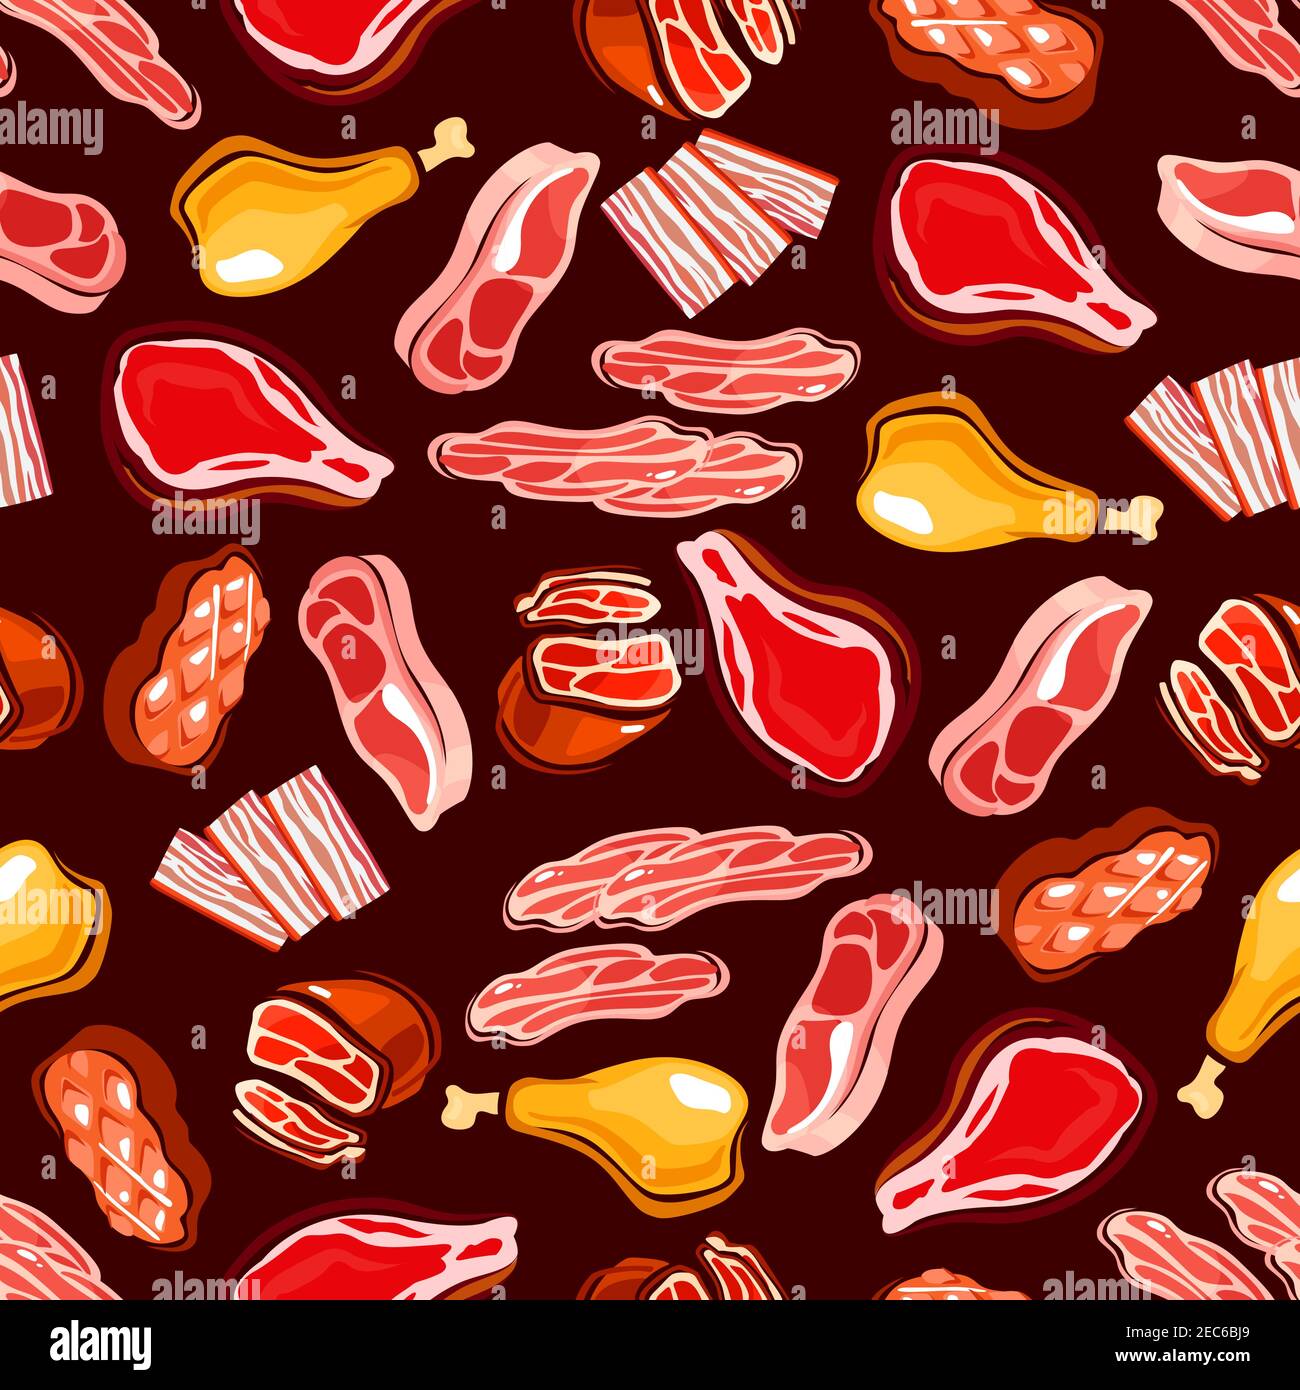 Meat food background. Seamless pattern of beef steaks, pork ribs